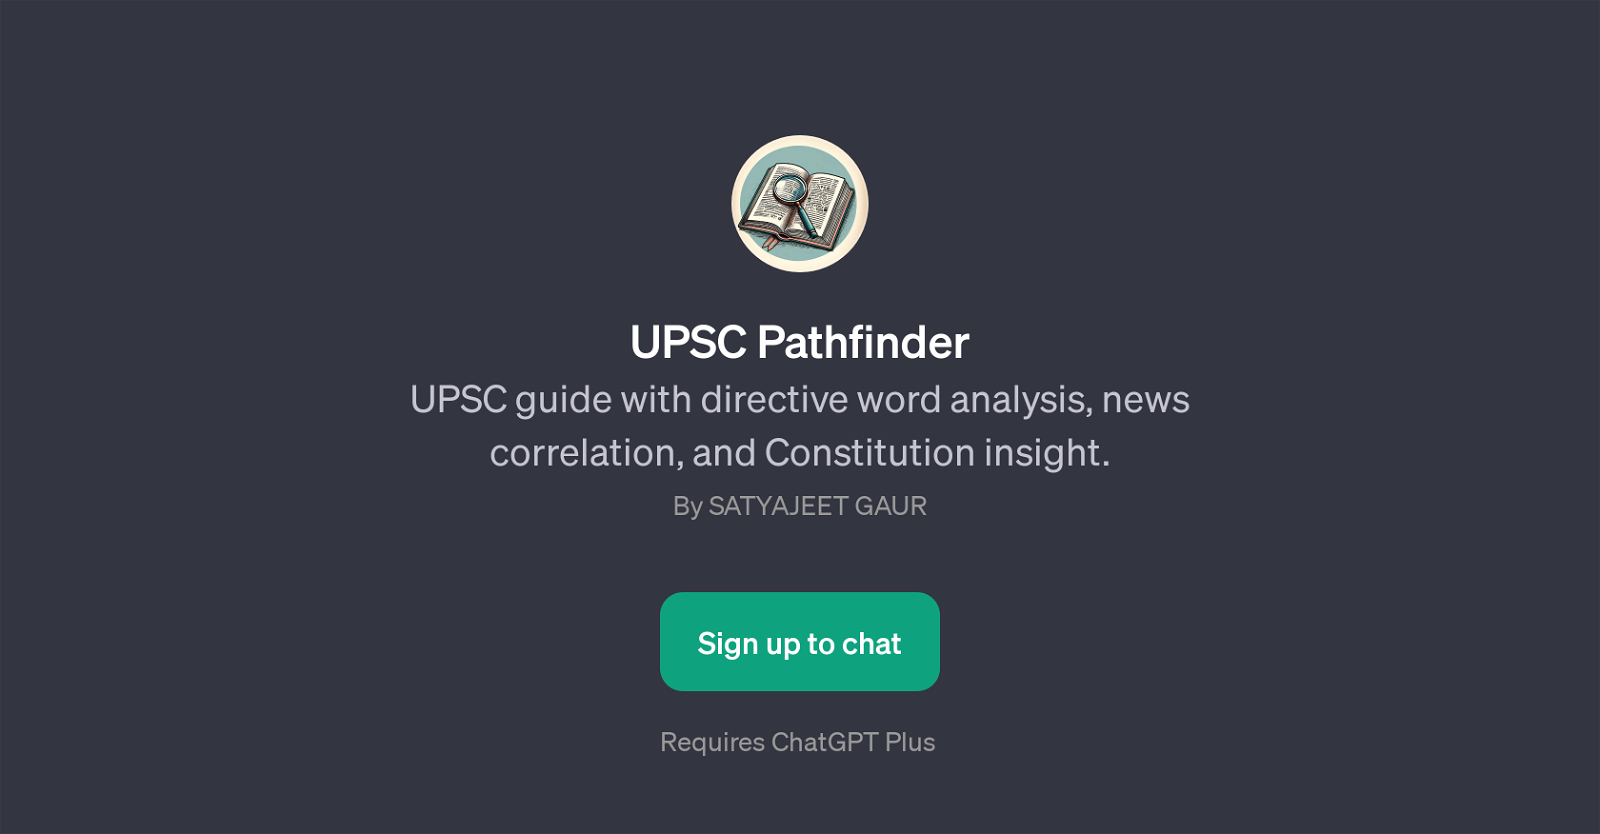 UPSC Pathfinder website